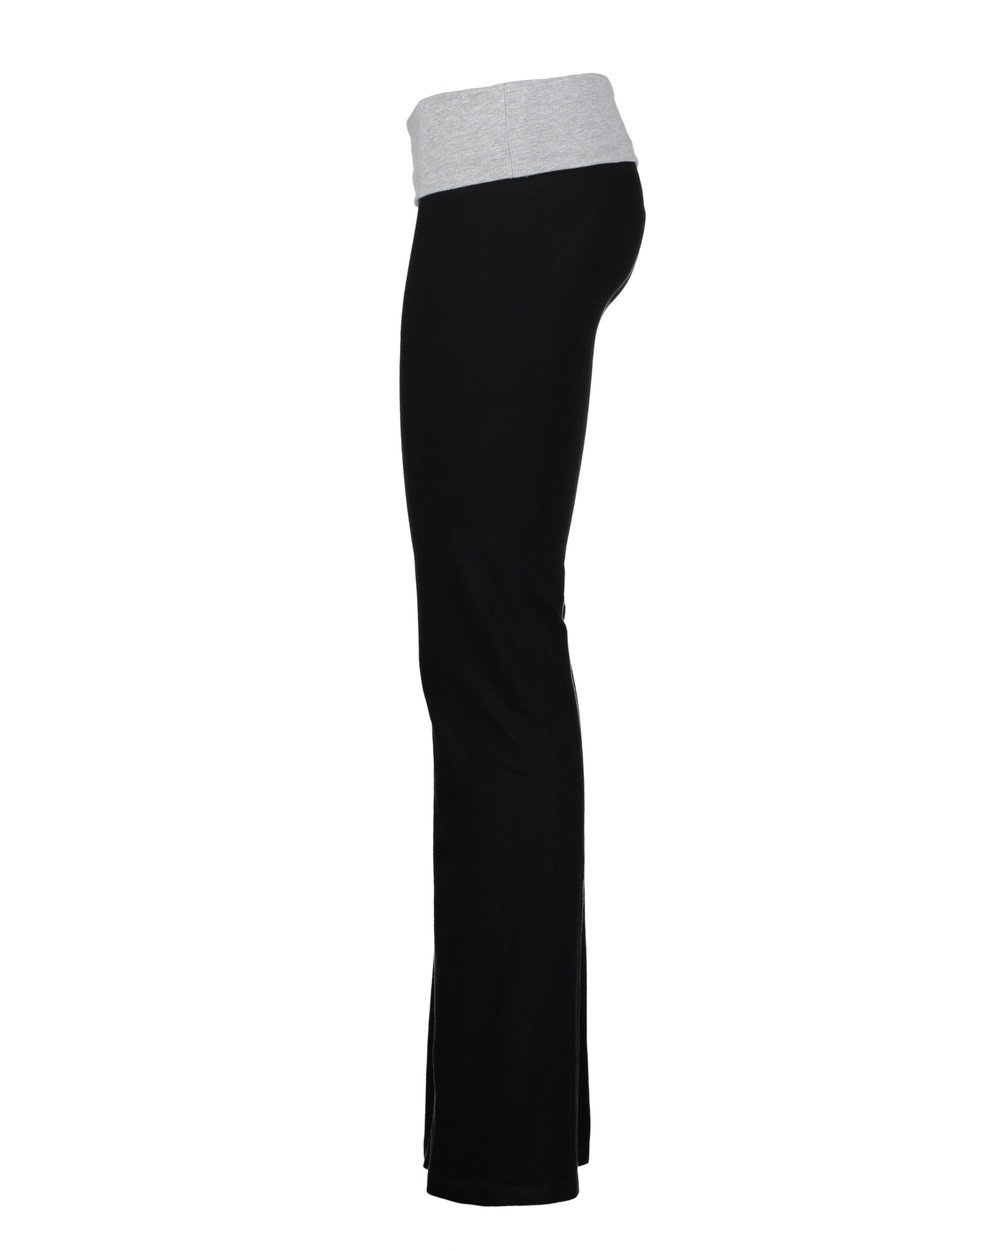 Buy the NWT WM's Zella Zelflex Black Yoga Pants w Drawstring Size SM